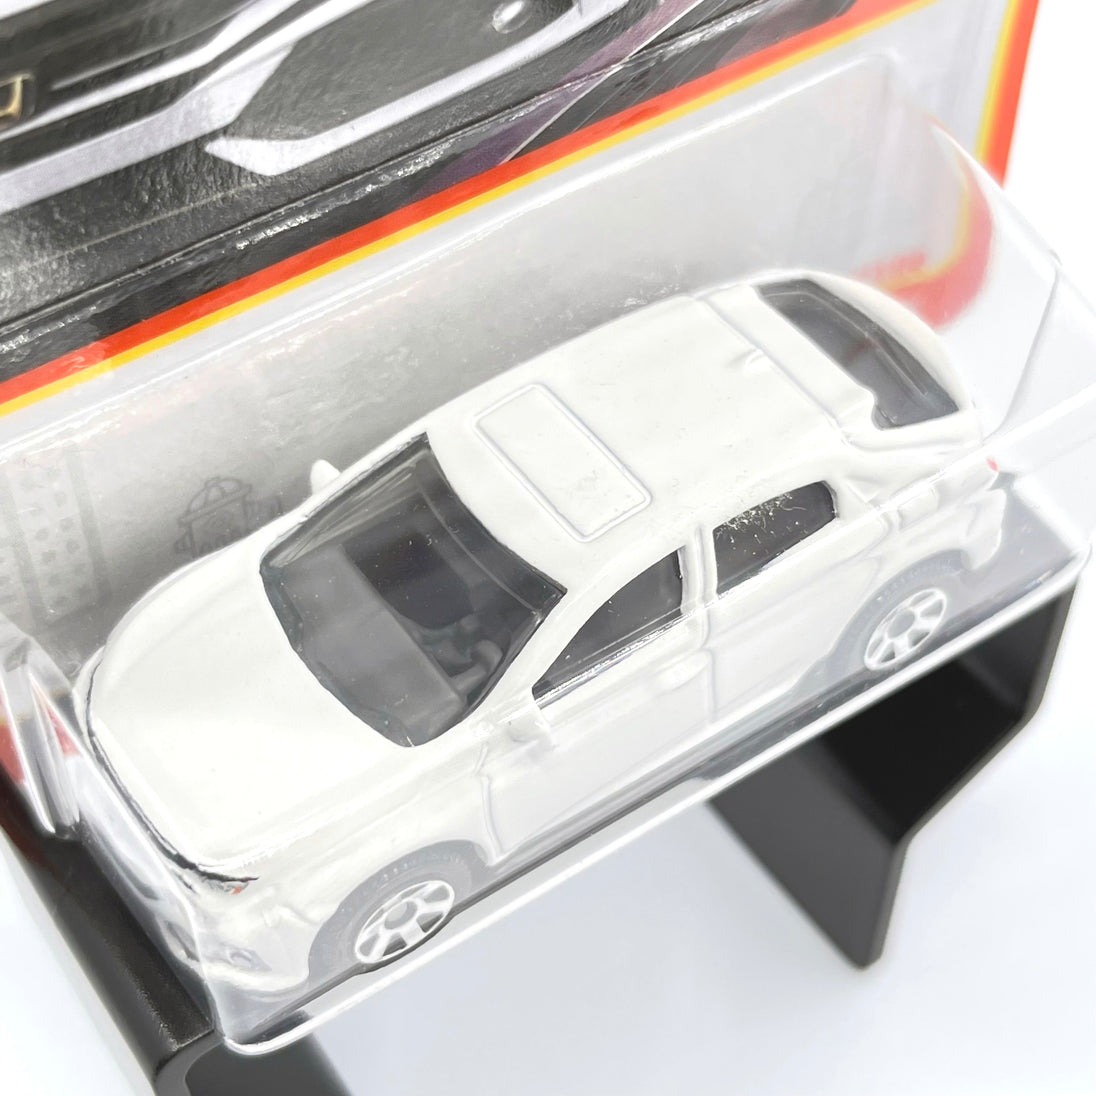 2017 Honda Civic Hatchback Rare MatchBox Alloy Diecast Car Model